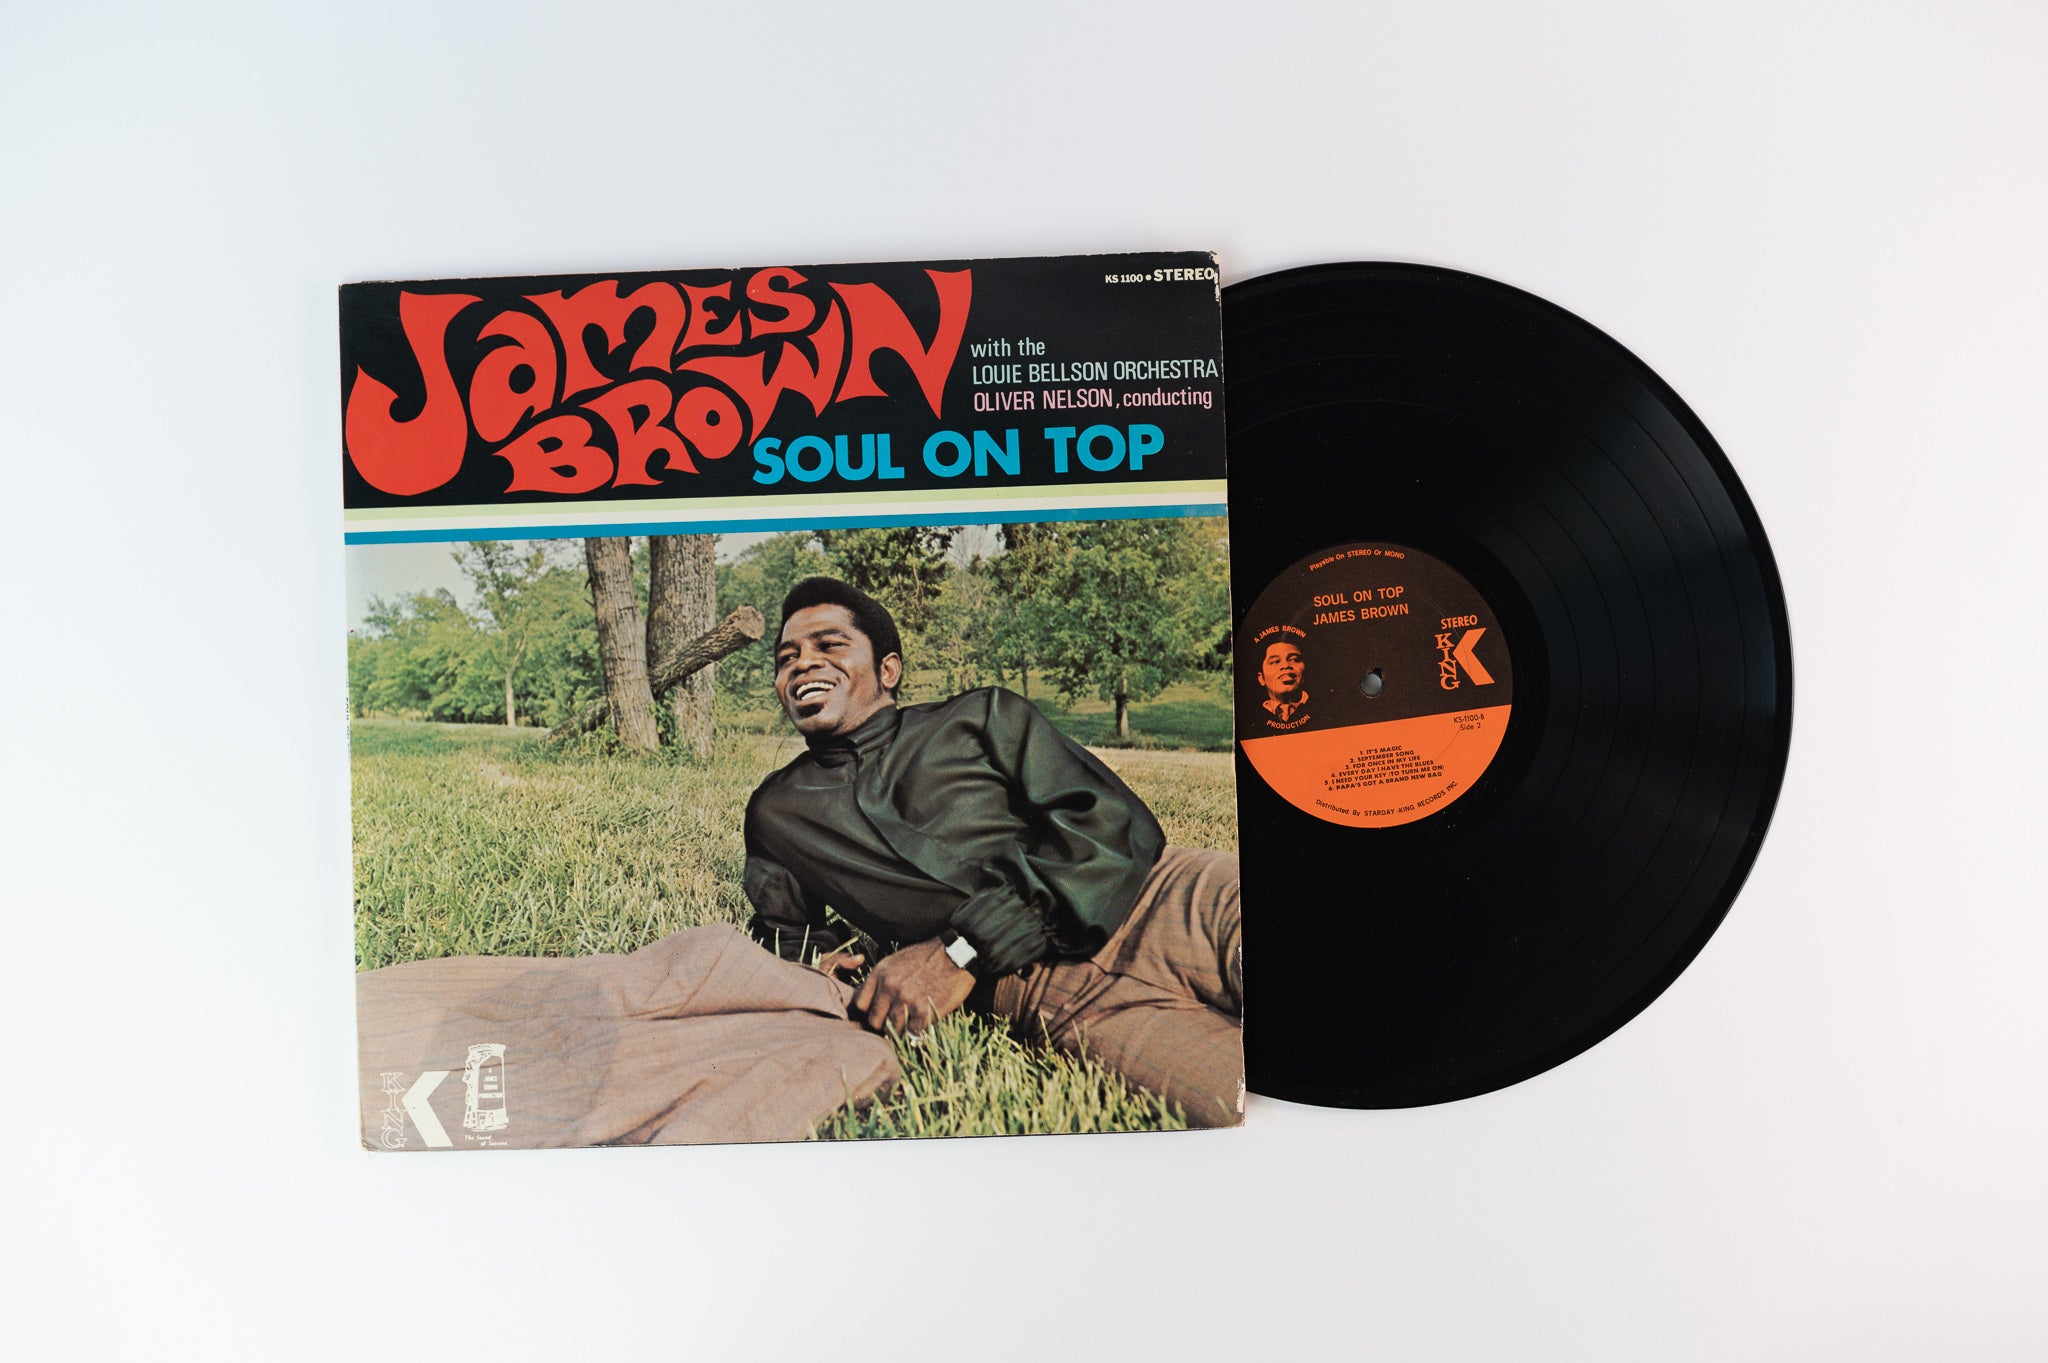 James Brown - Soul On Top on King